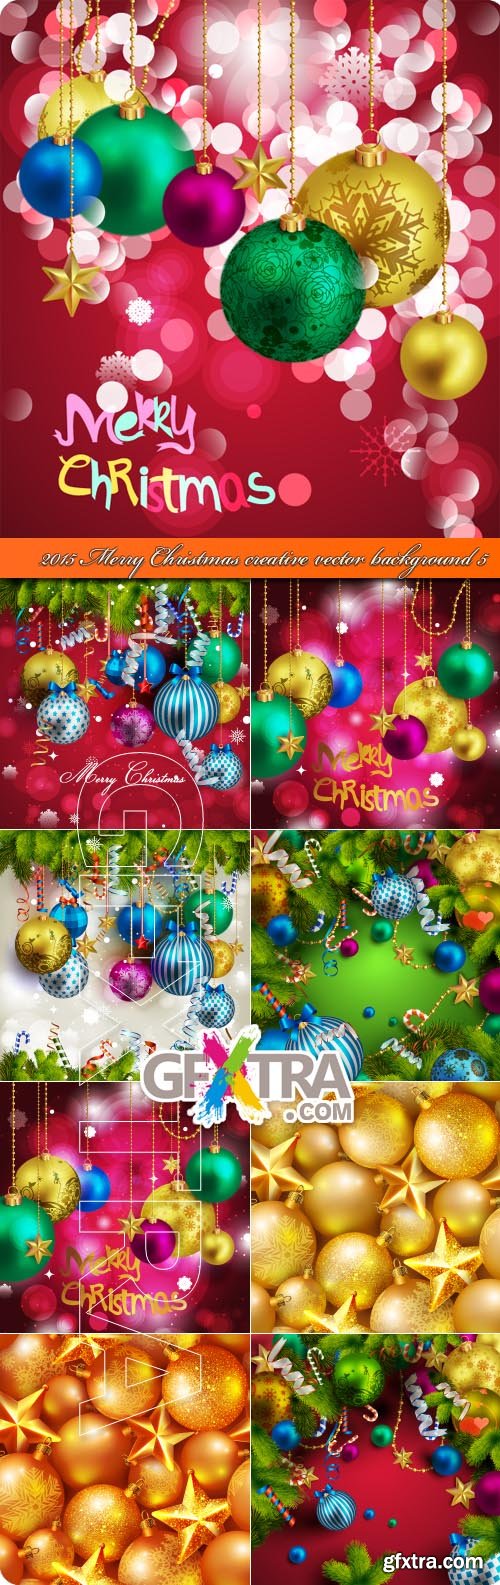 2015 Merry Christmas creative vector background 5